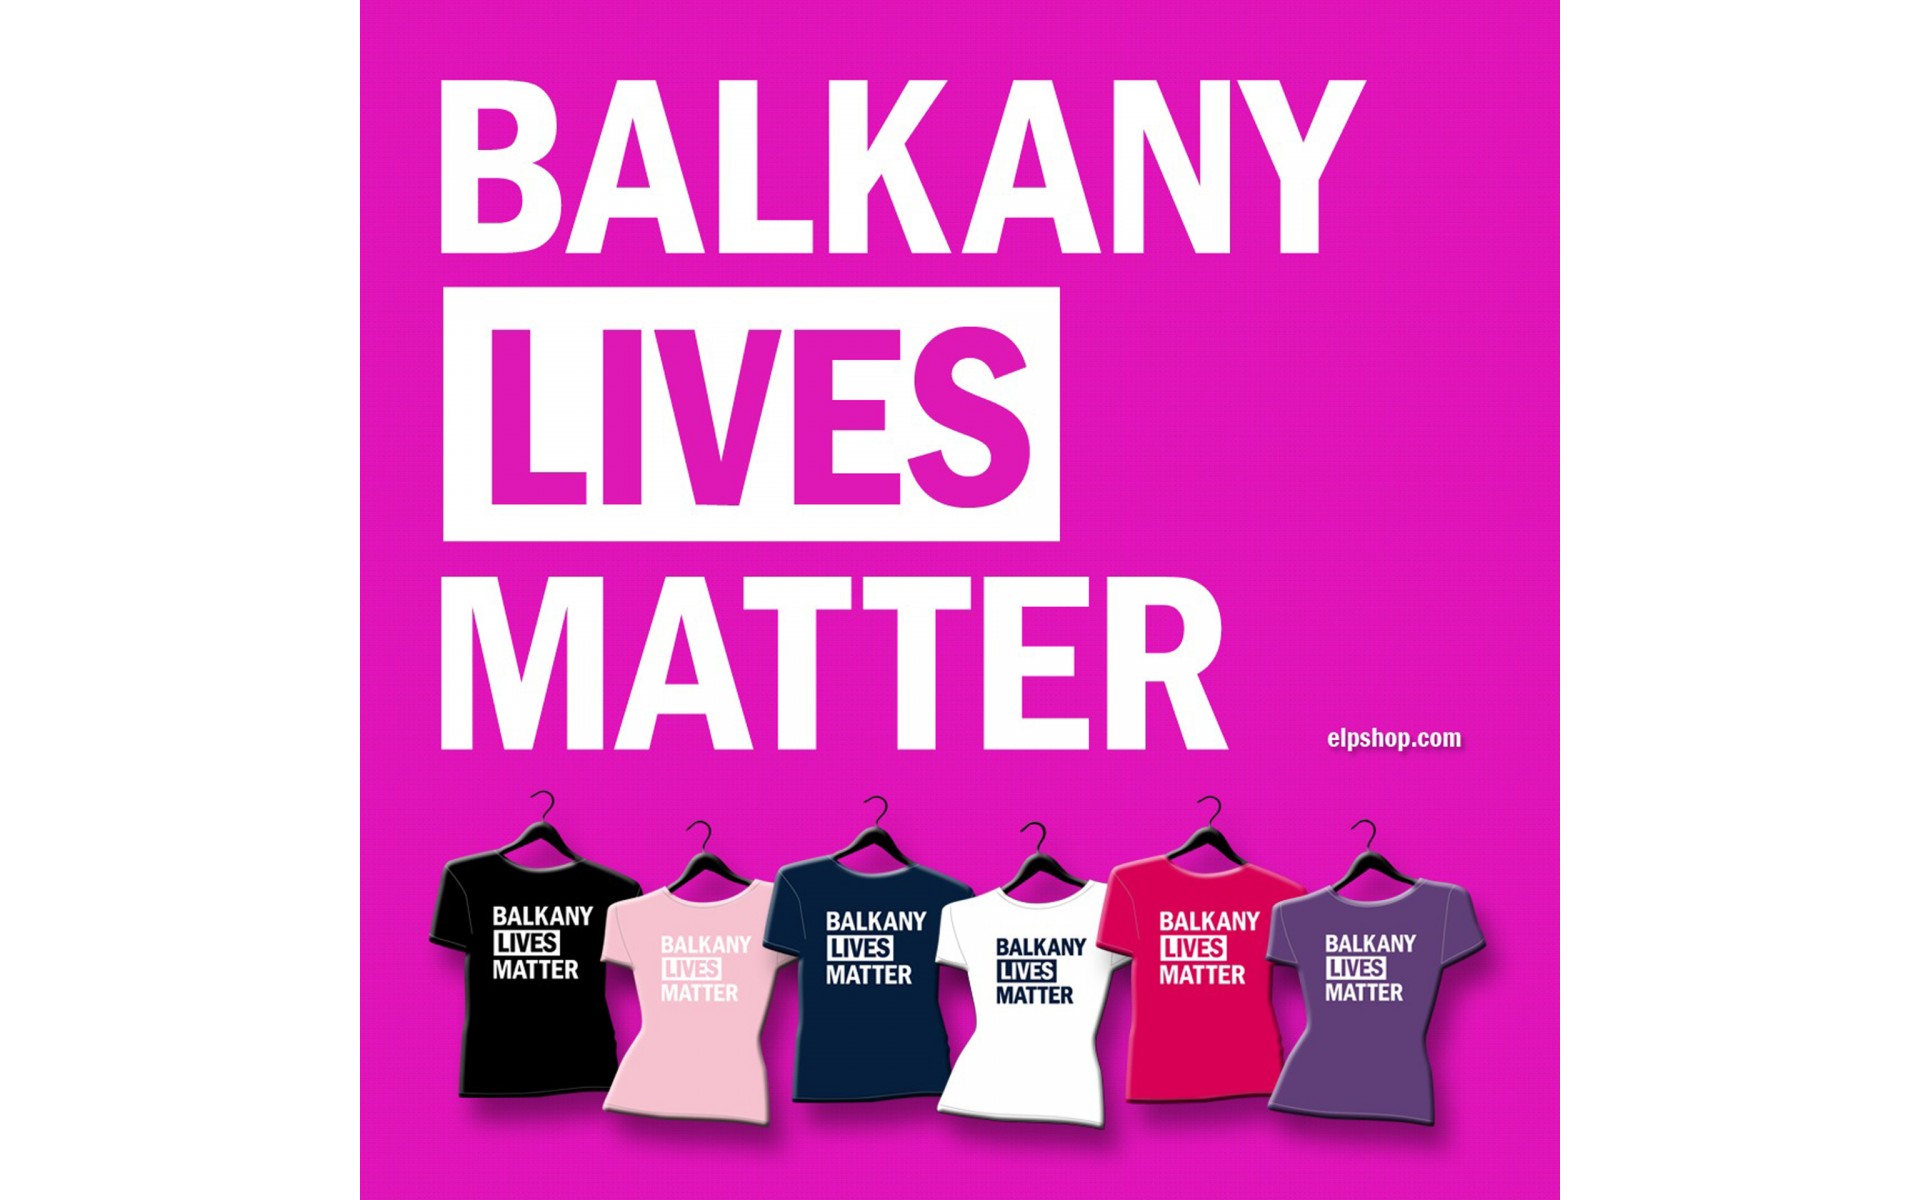 Balkany Lives Matter